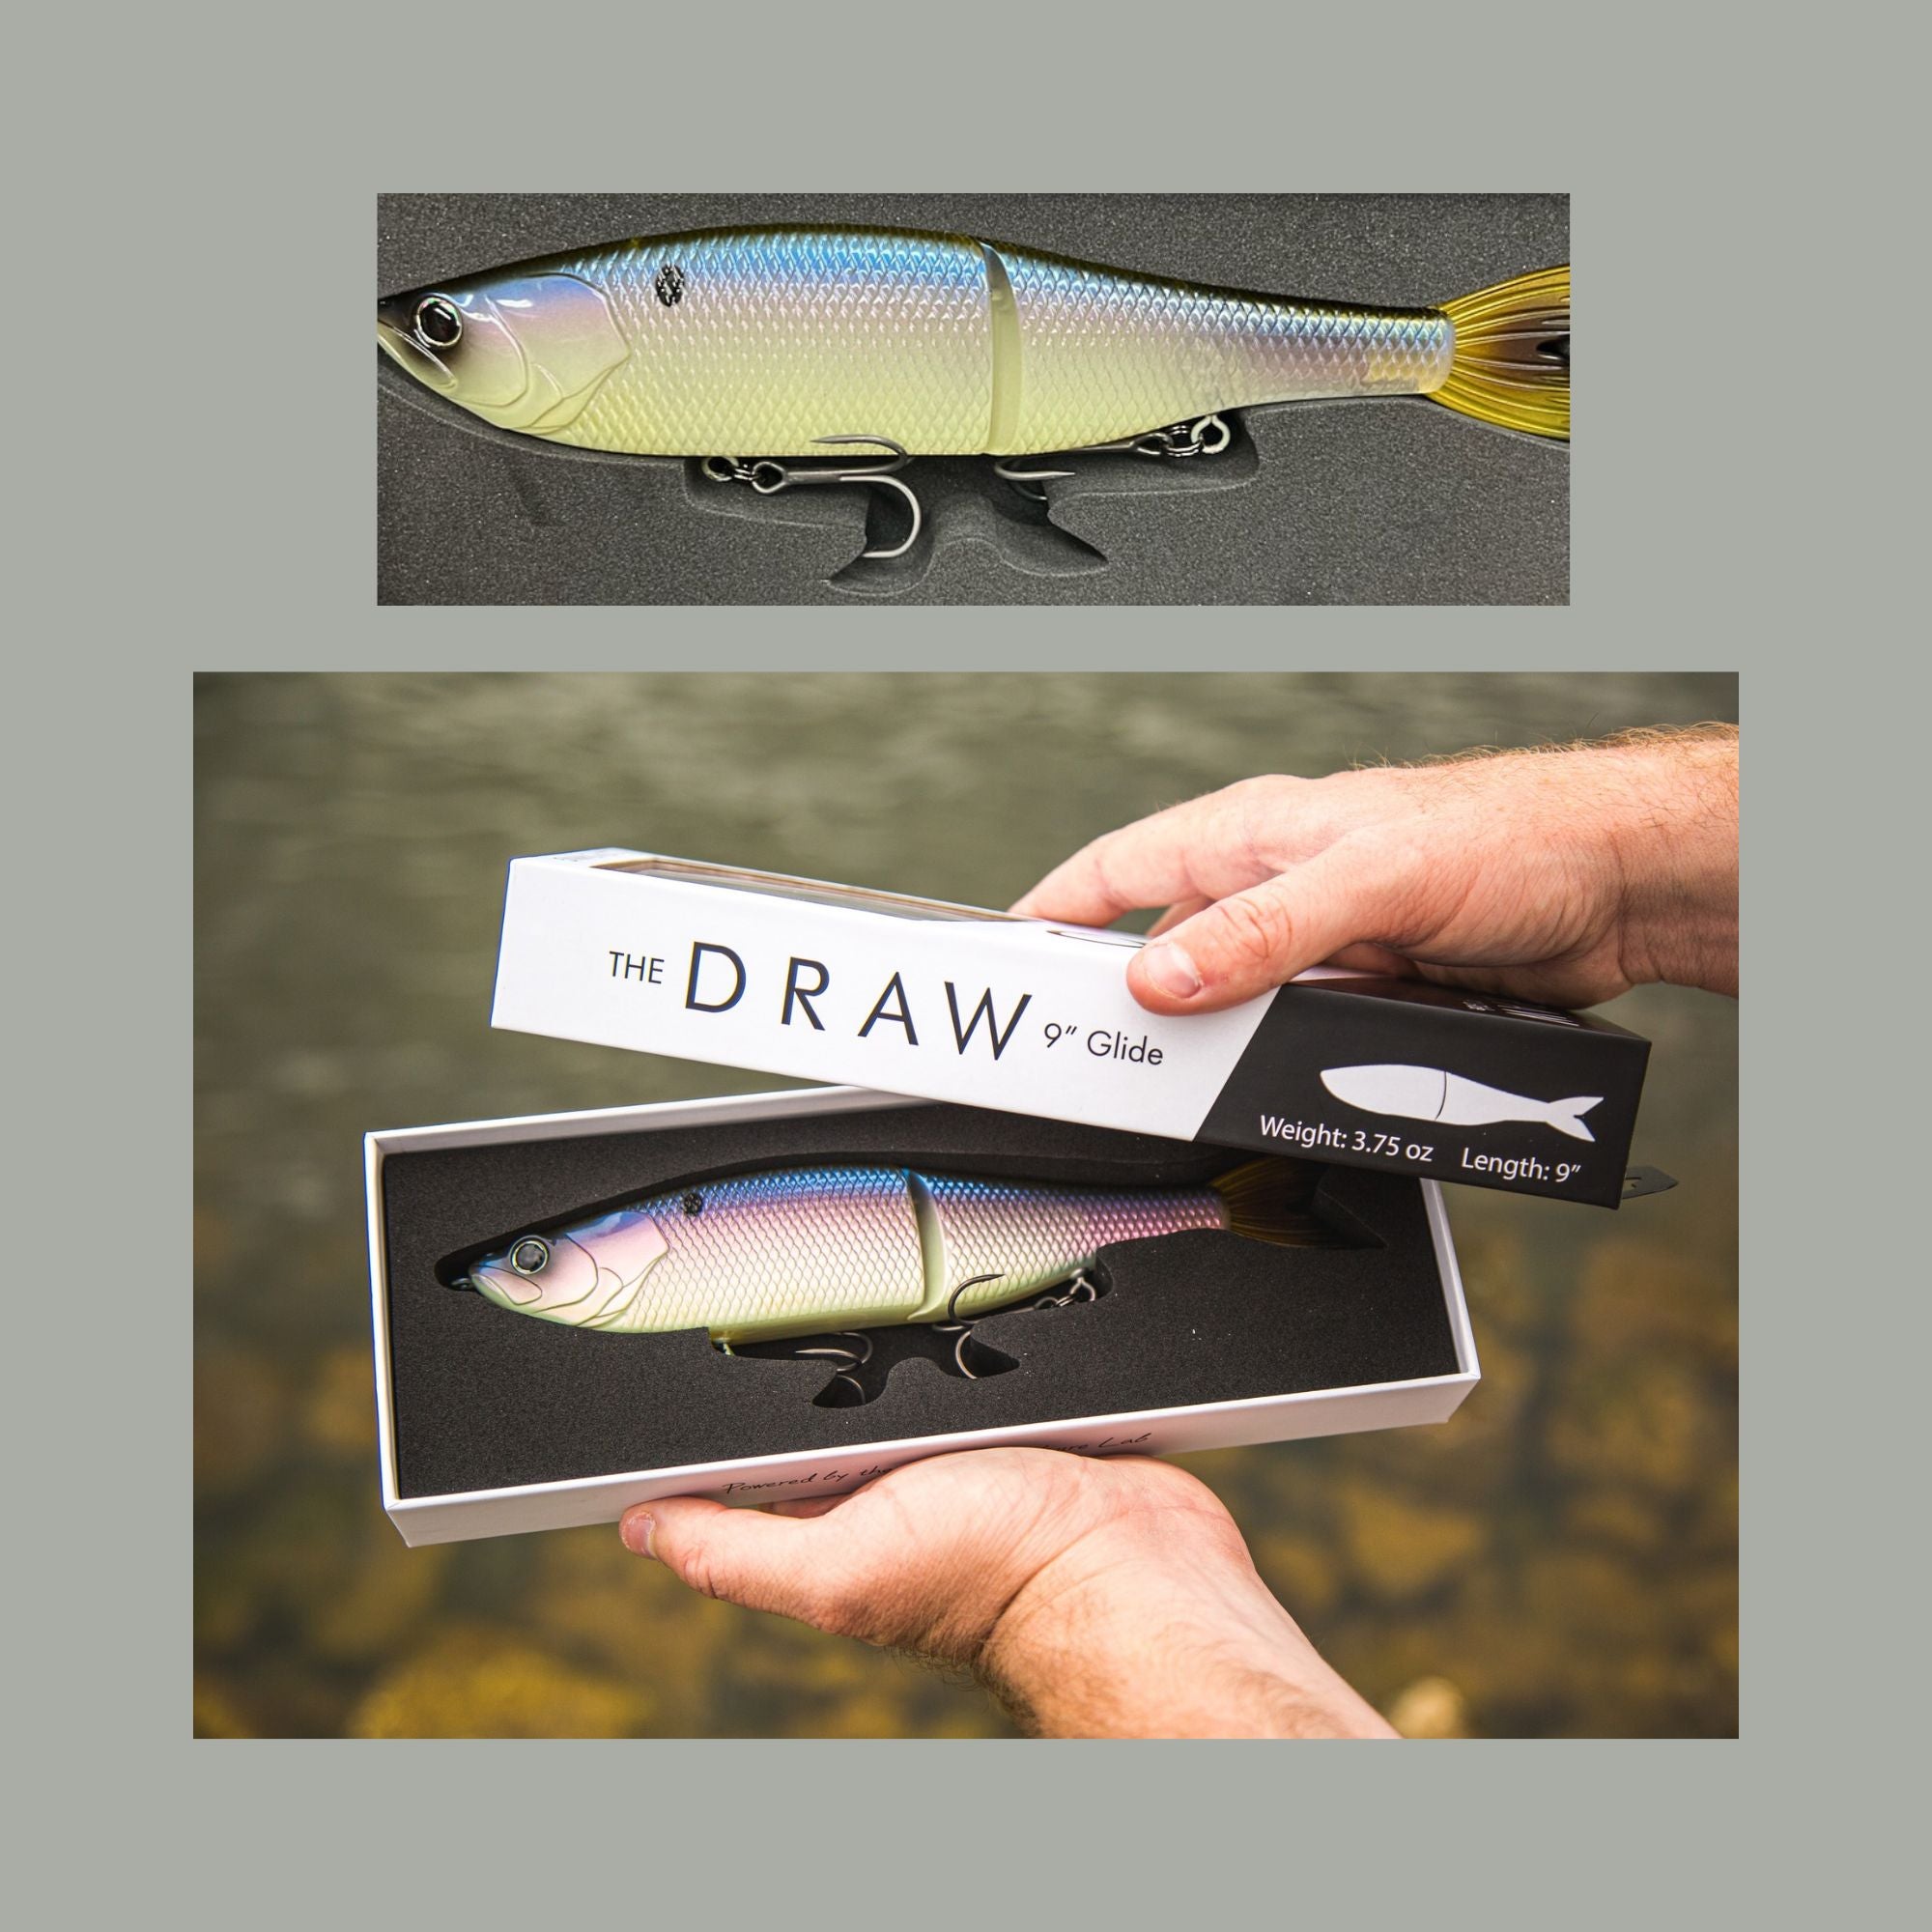 The Draw, 9 Glide Bait, 6th Sense, Fishing Store